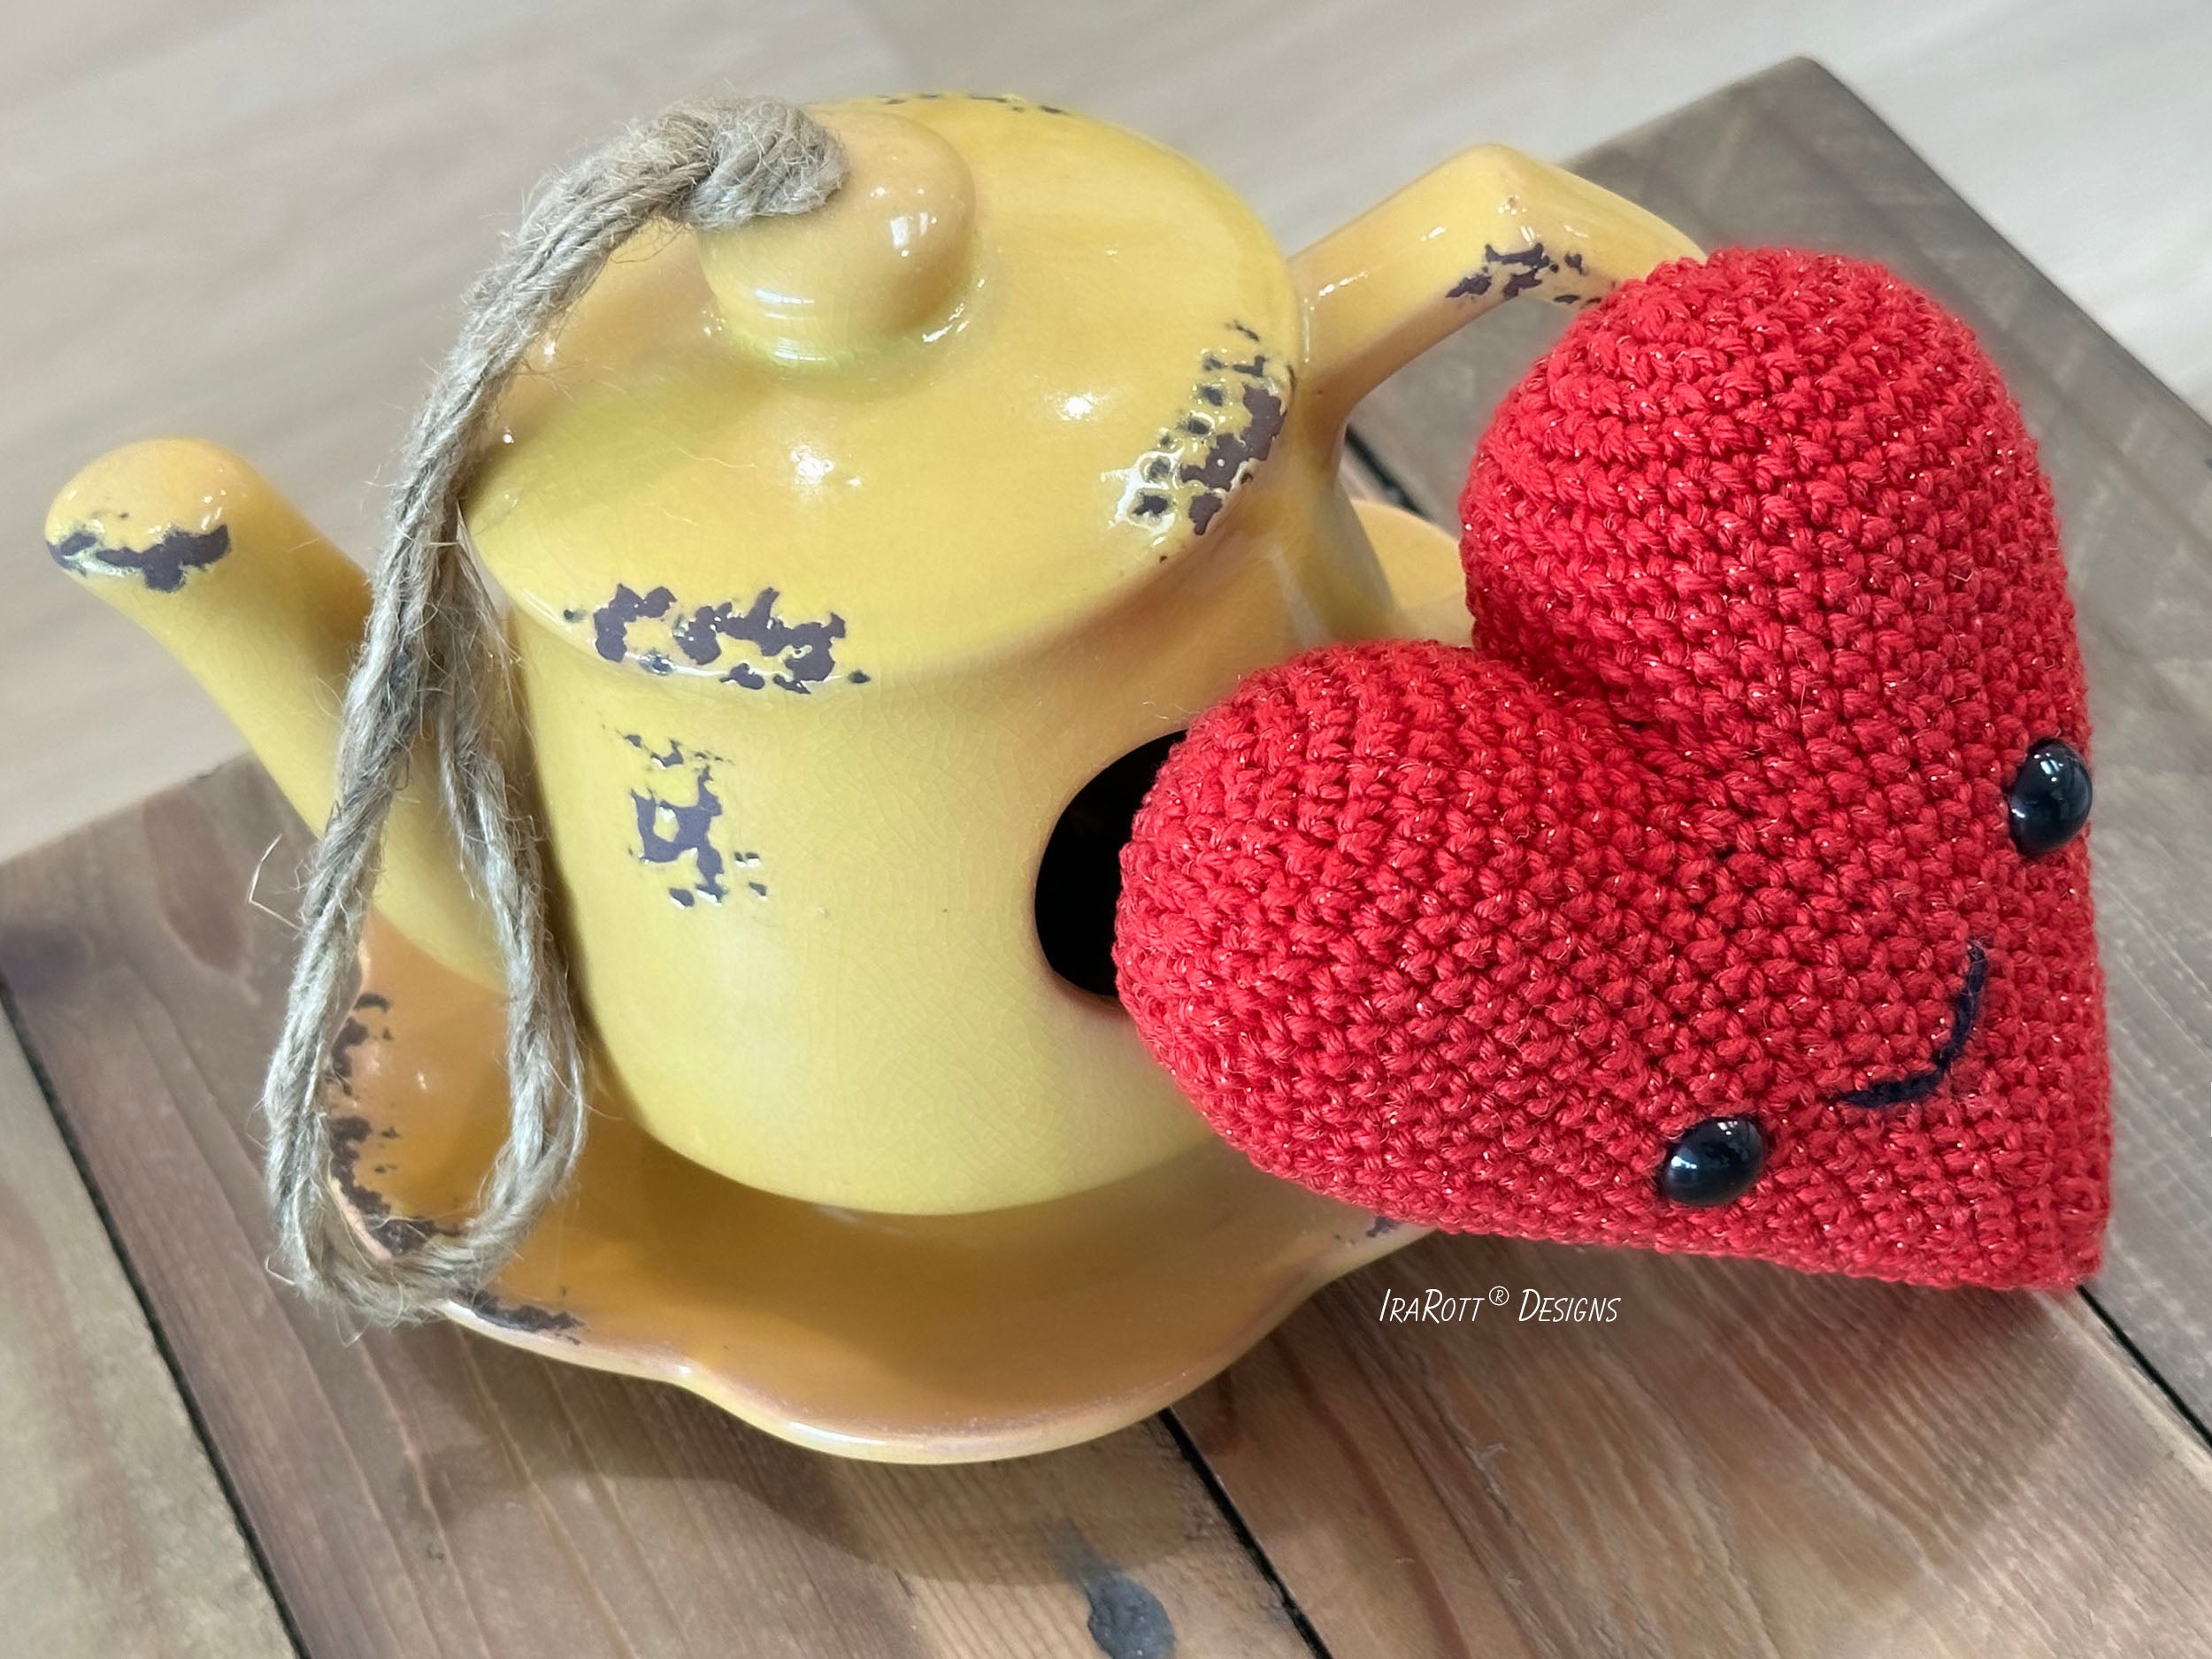 My Charming Smiling Heart and Eco-Friendly Crochet Hooks – IraRott Designs